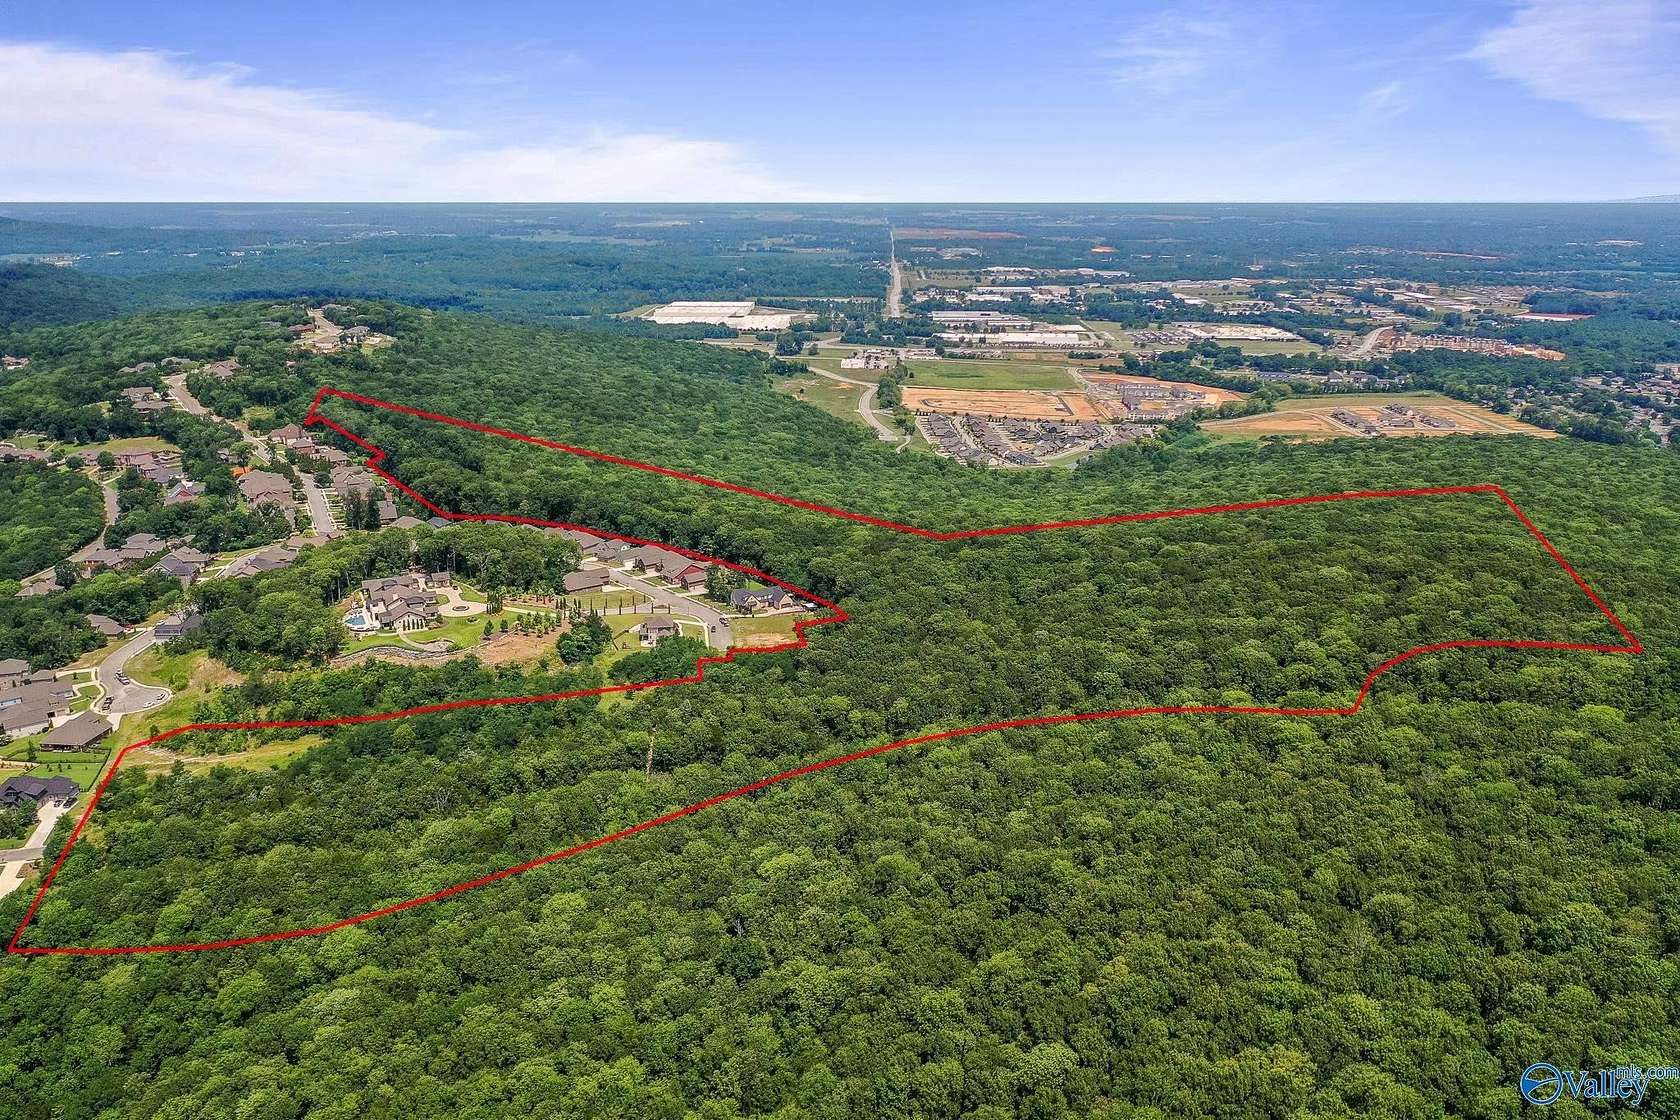 64 Acres of Land for Sale in Huntsville, Alabama